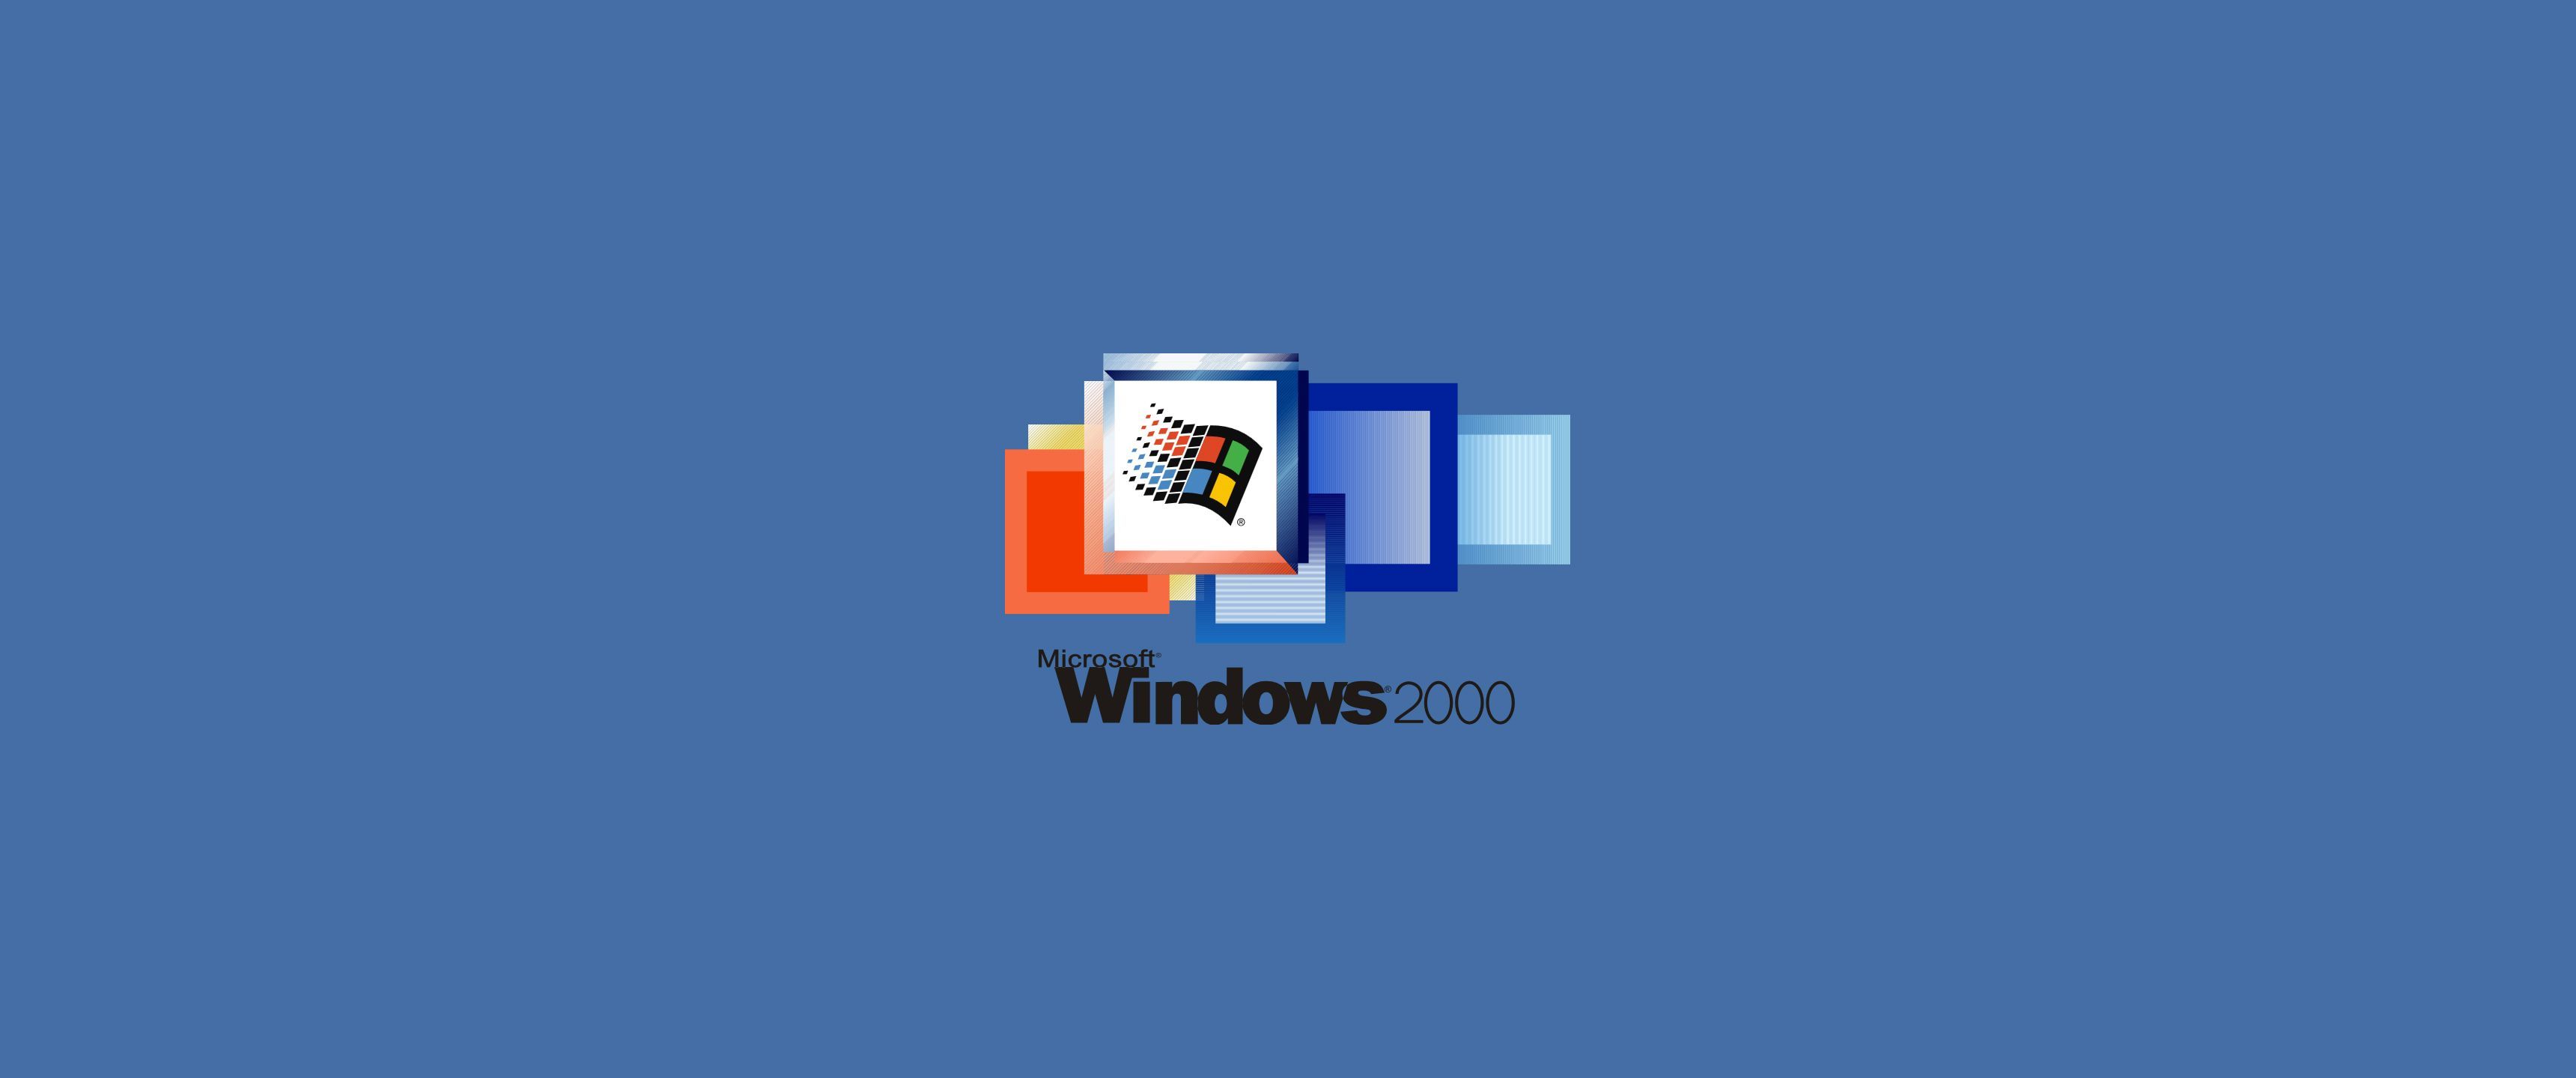 Windows 2000 Wallpaper Free Windows 2000 Background